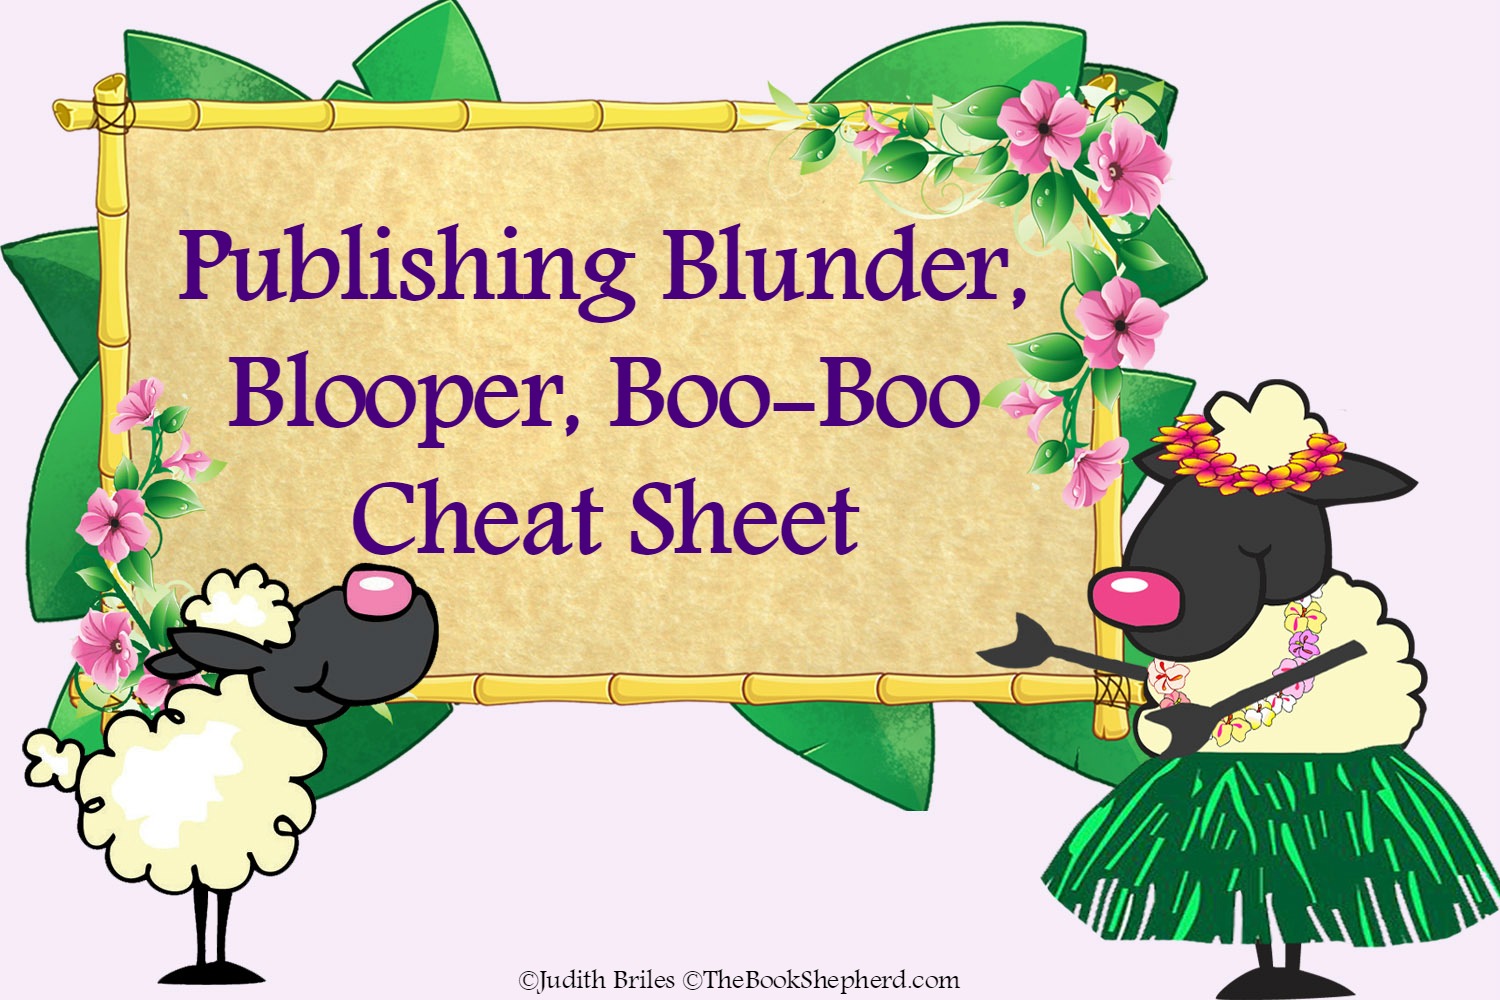 Publishing Blunder, Blopper, Boo-Boo Cheat Sheet